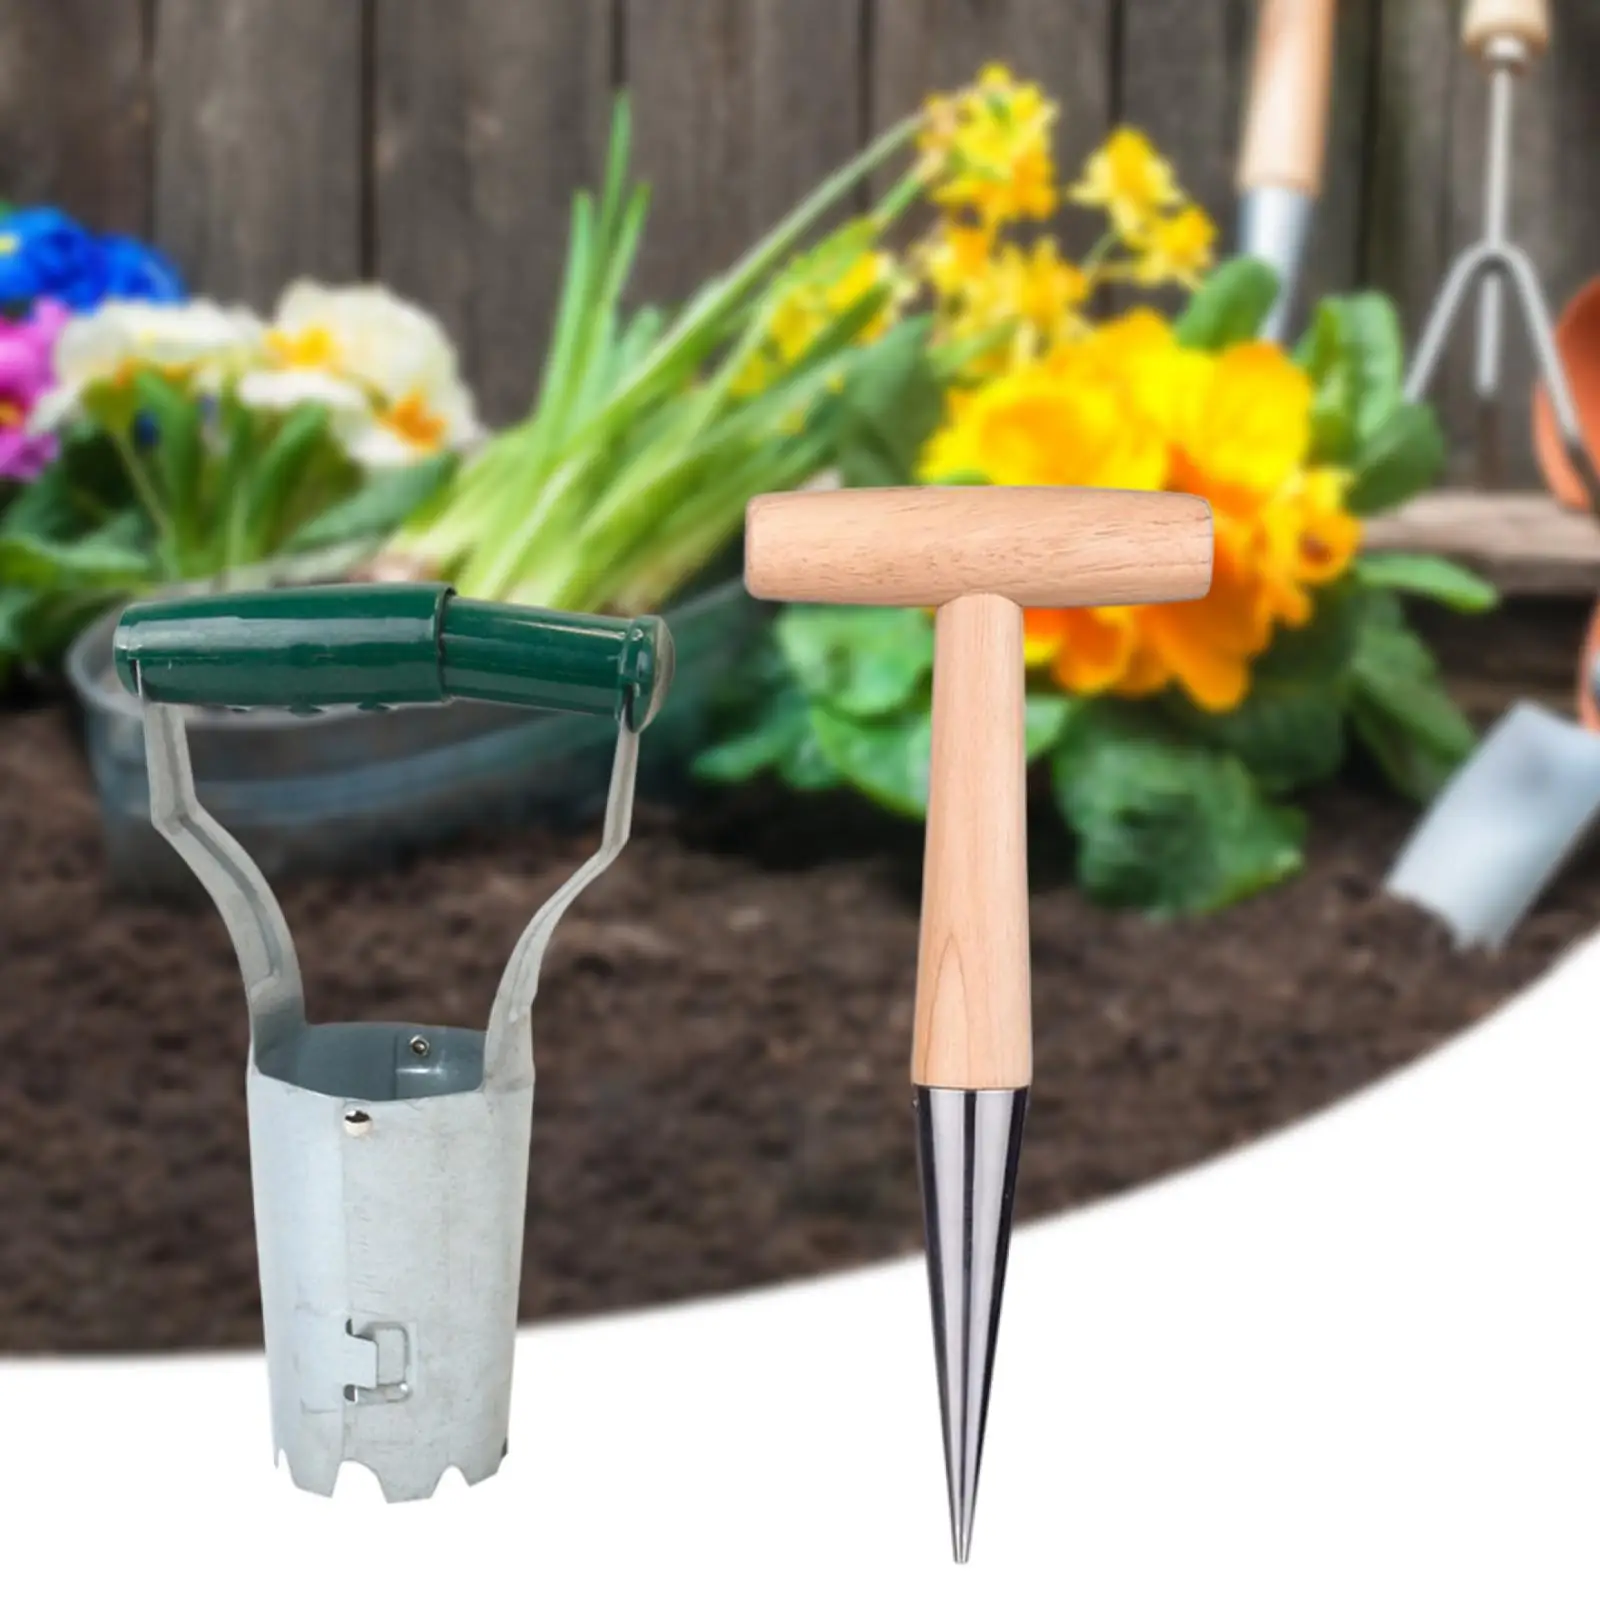 2Pcs Garden Bulb Planting Tool, Garden Flower Bulb Planting Sowing Plant Transplanting Seedling Remover Hand Digger Bulb Tool